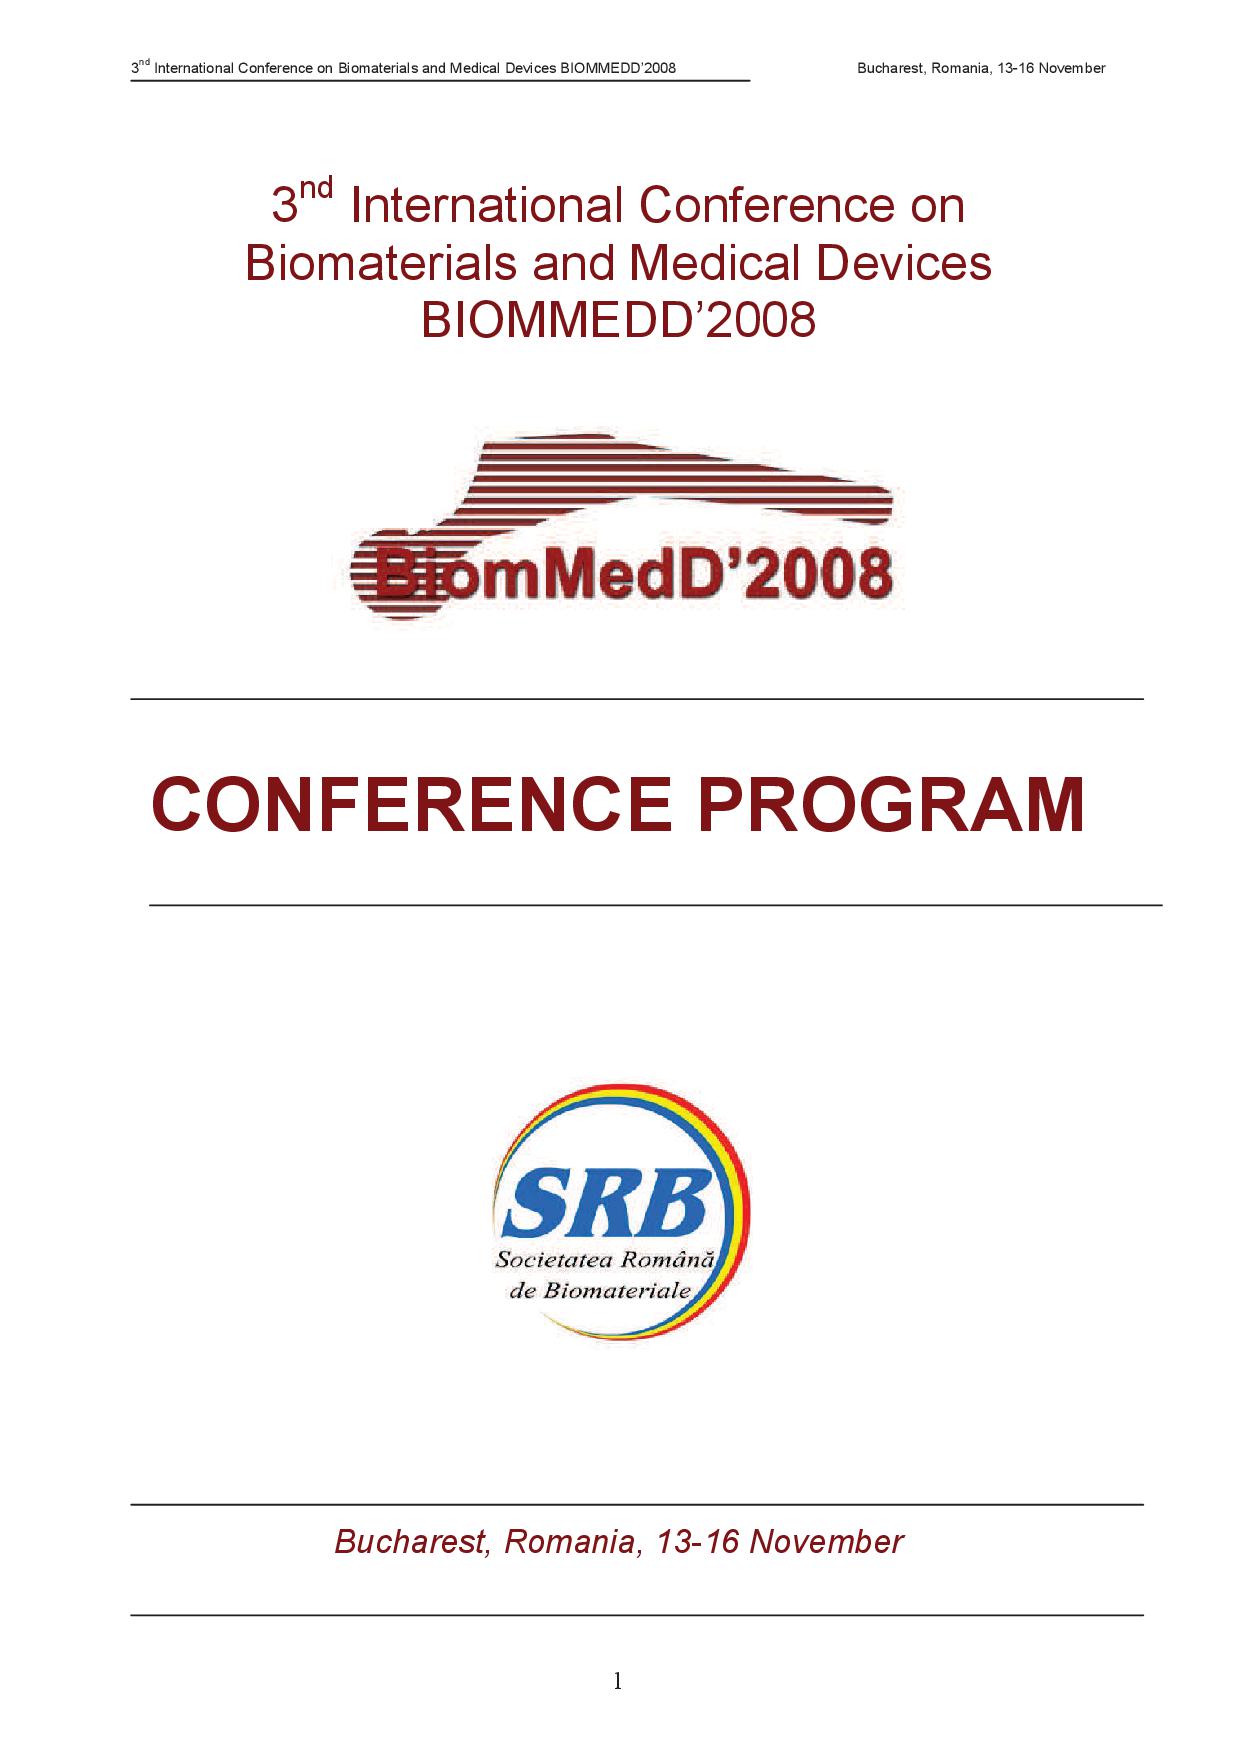 Program_BIOMMEDD2008